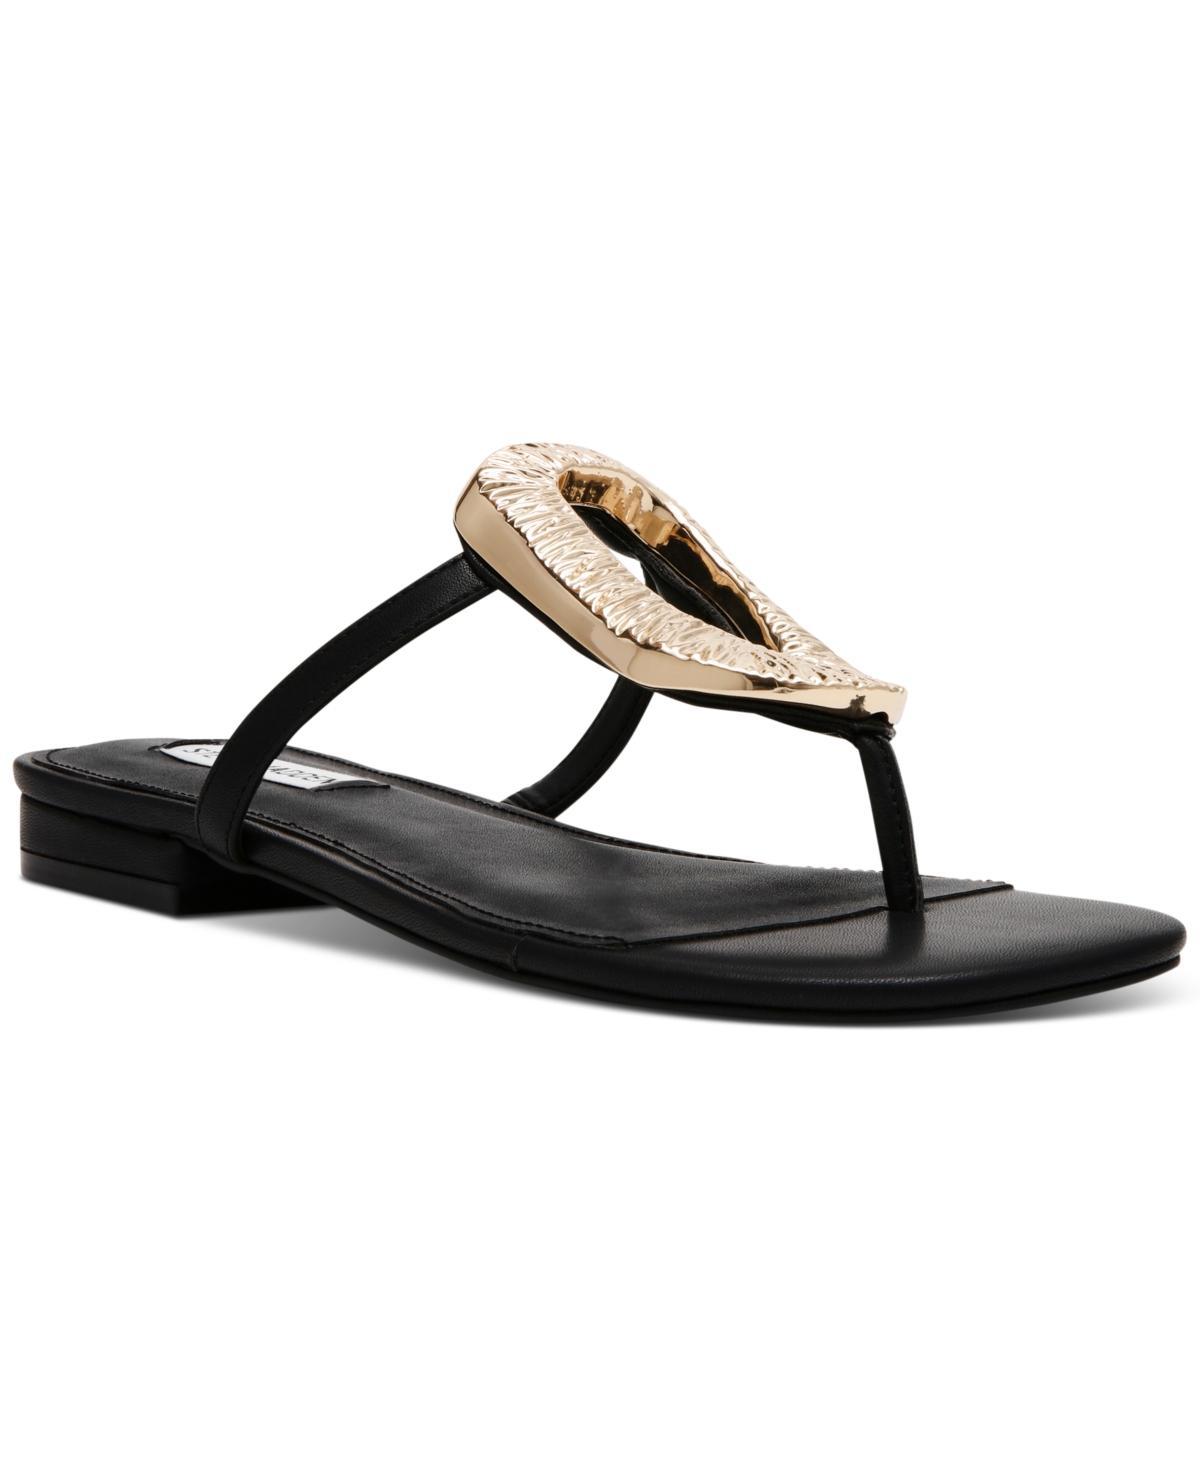 Steve Madden Melo Women's Sandals Product Image